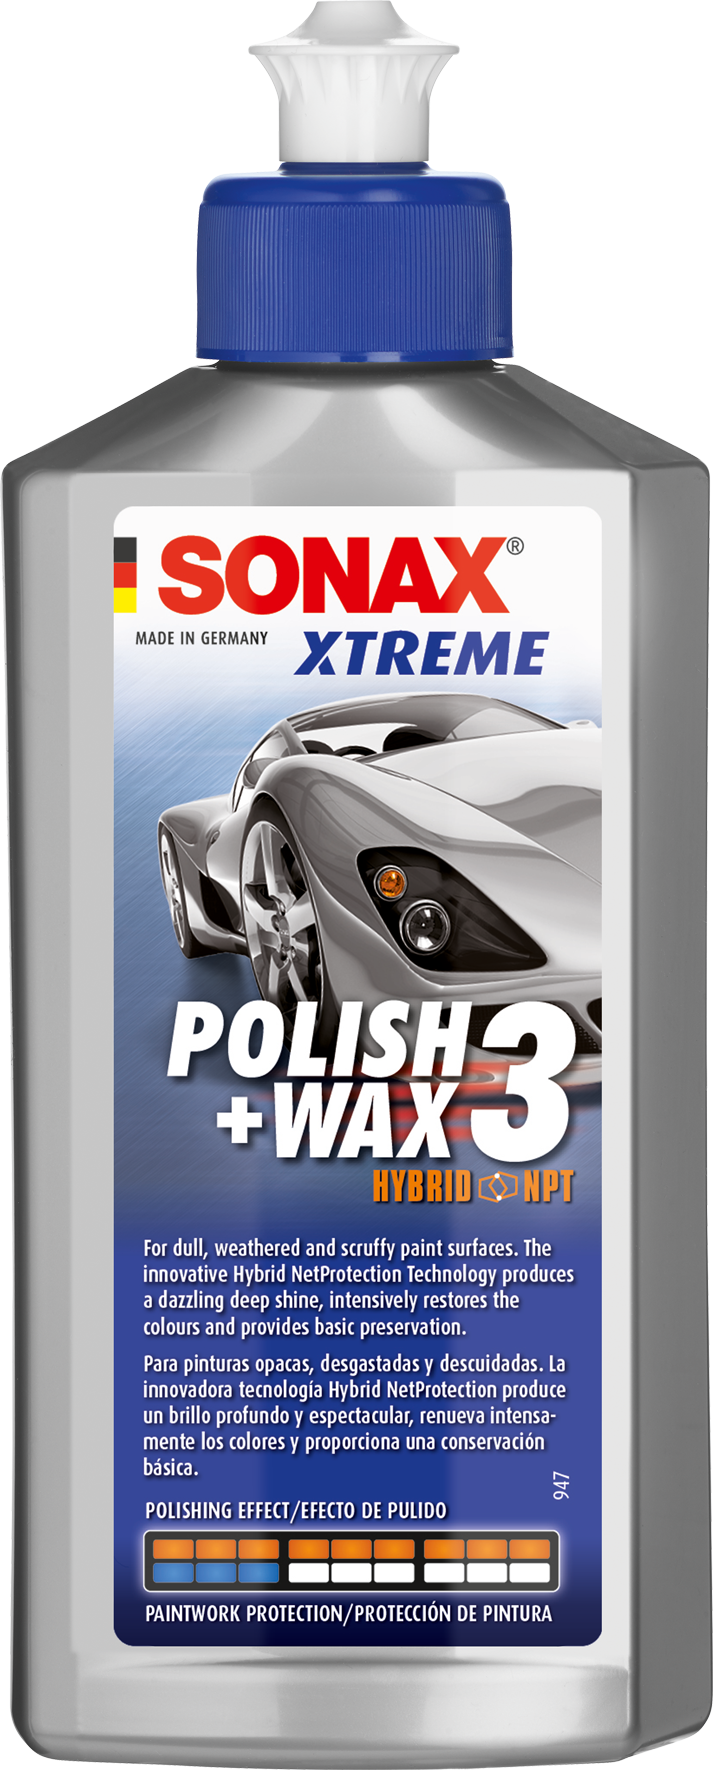 Sonax SONAX Antifrost & Klarsicht ICE FRESH 60 L. 01338000